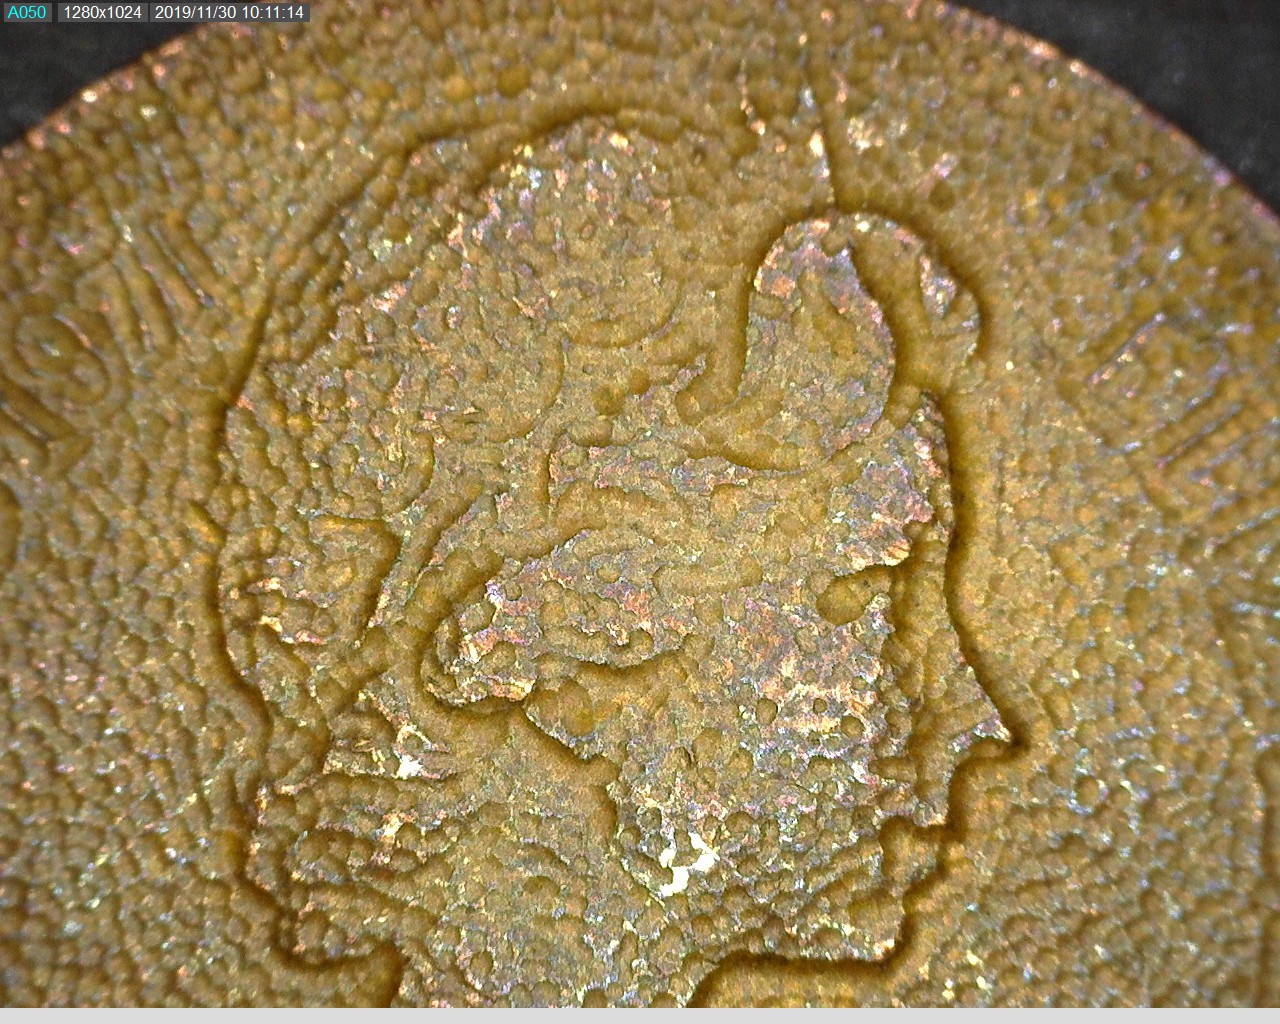 Penny 1971 B.jpg